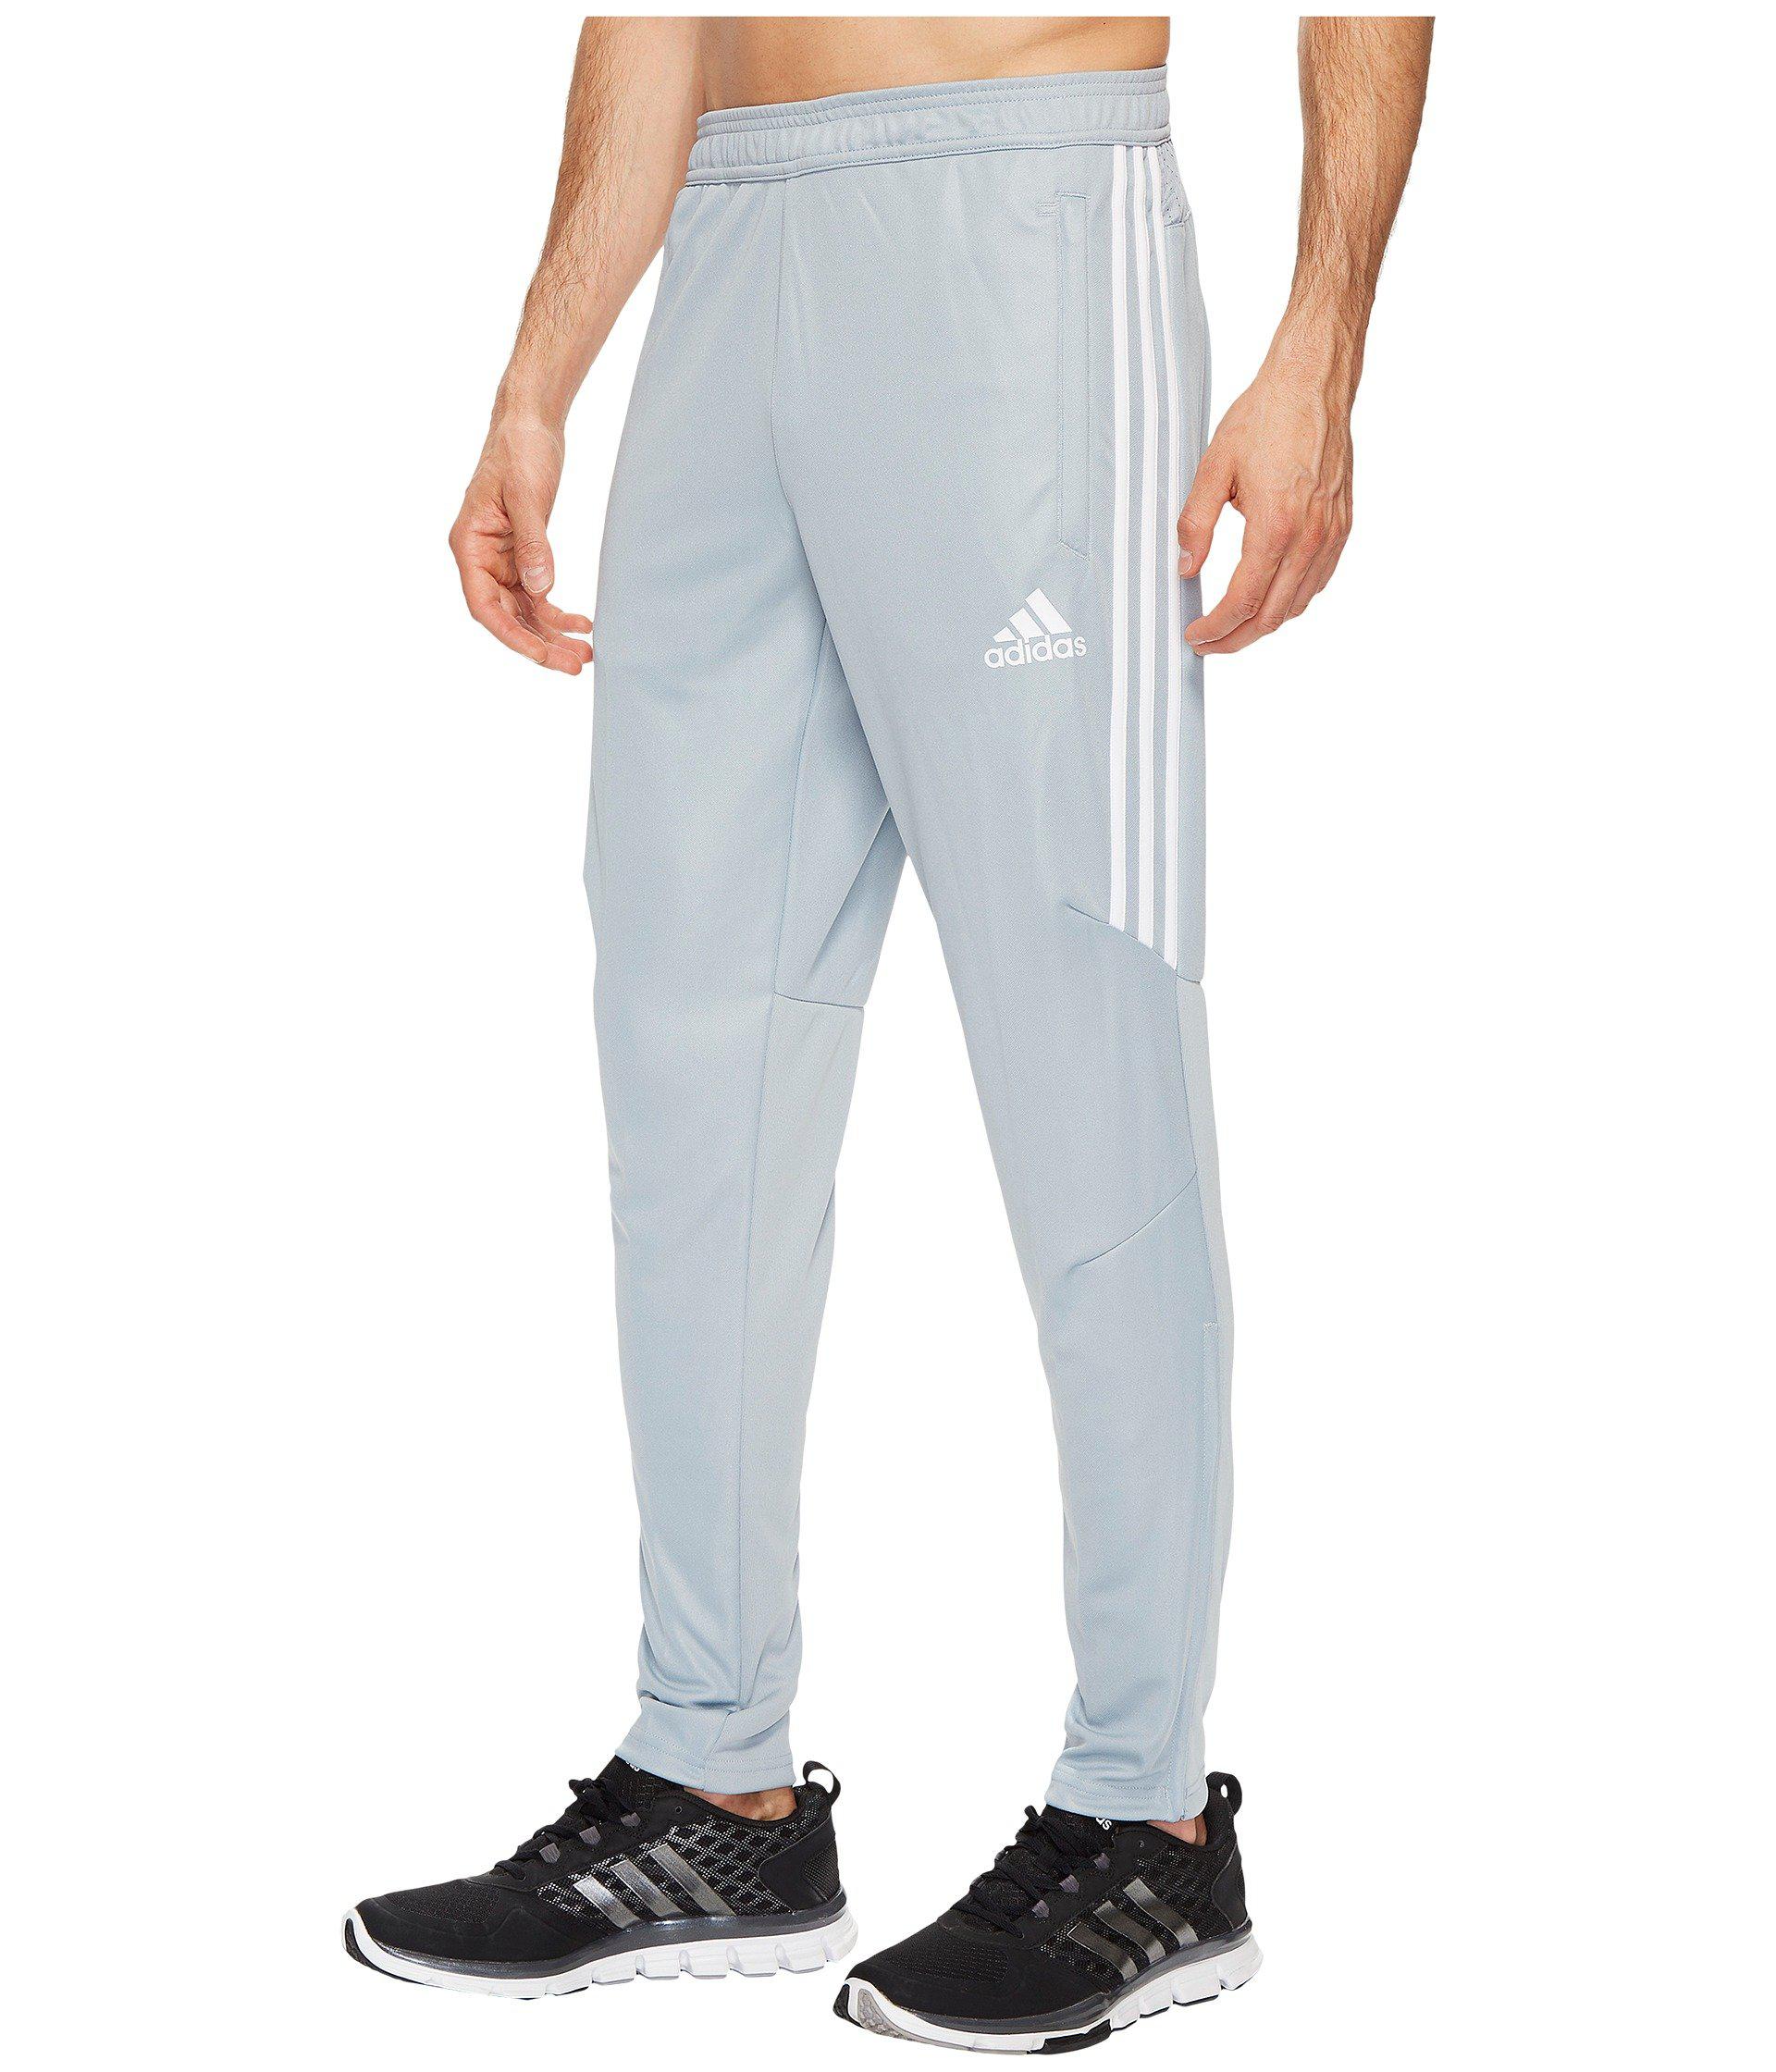 adidas light grey sweatpants